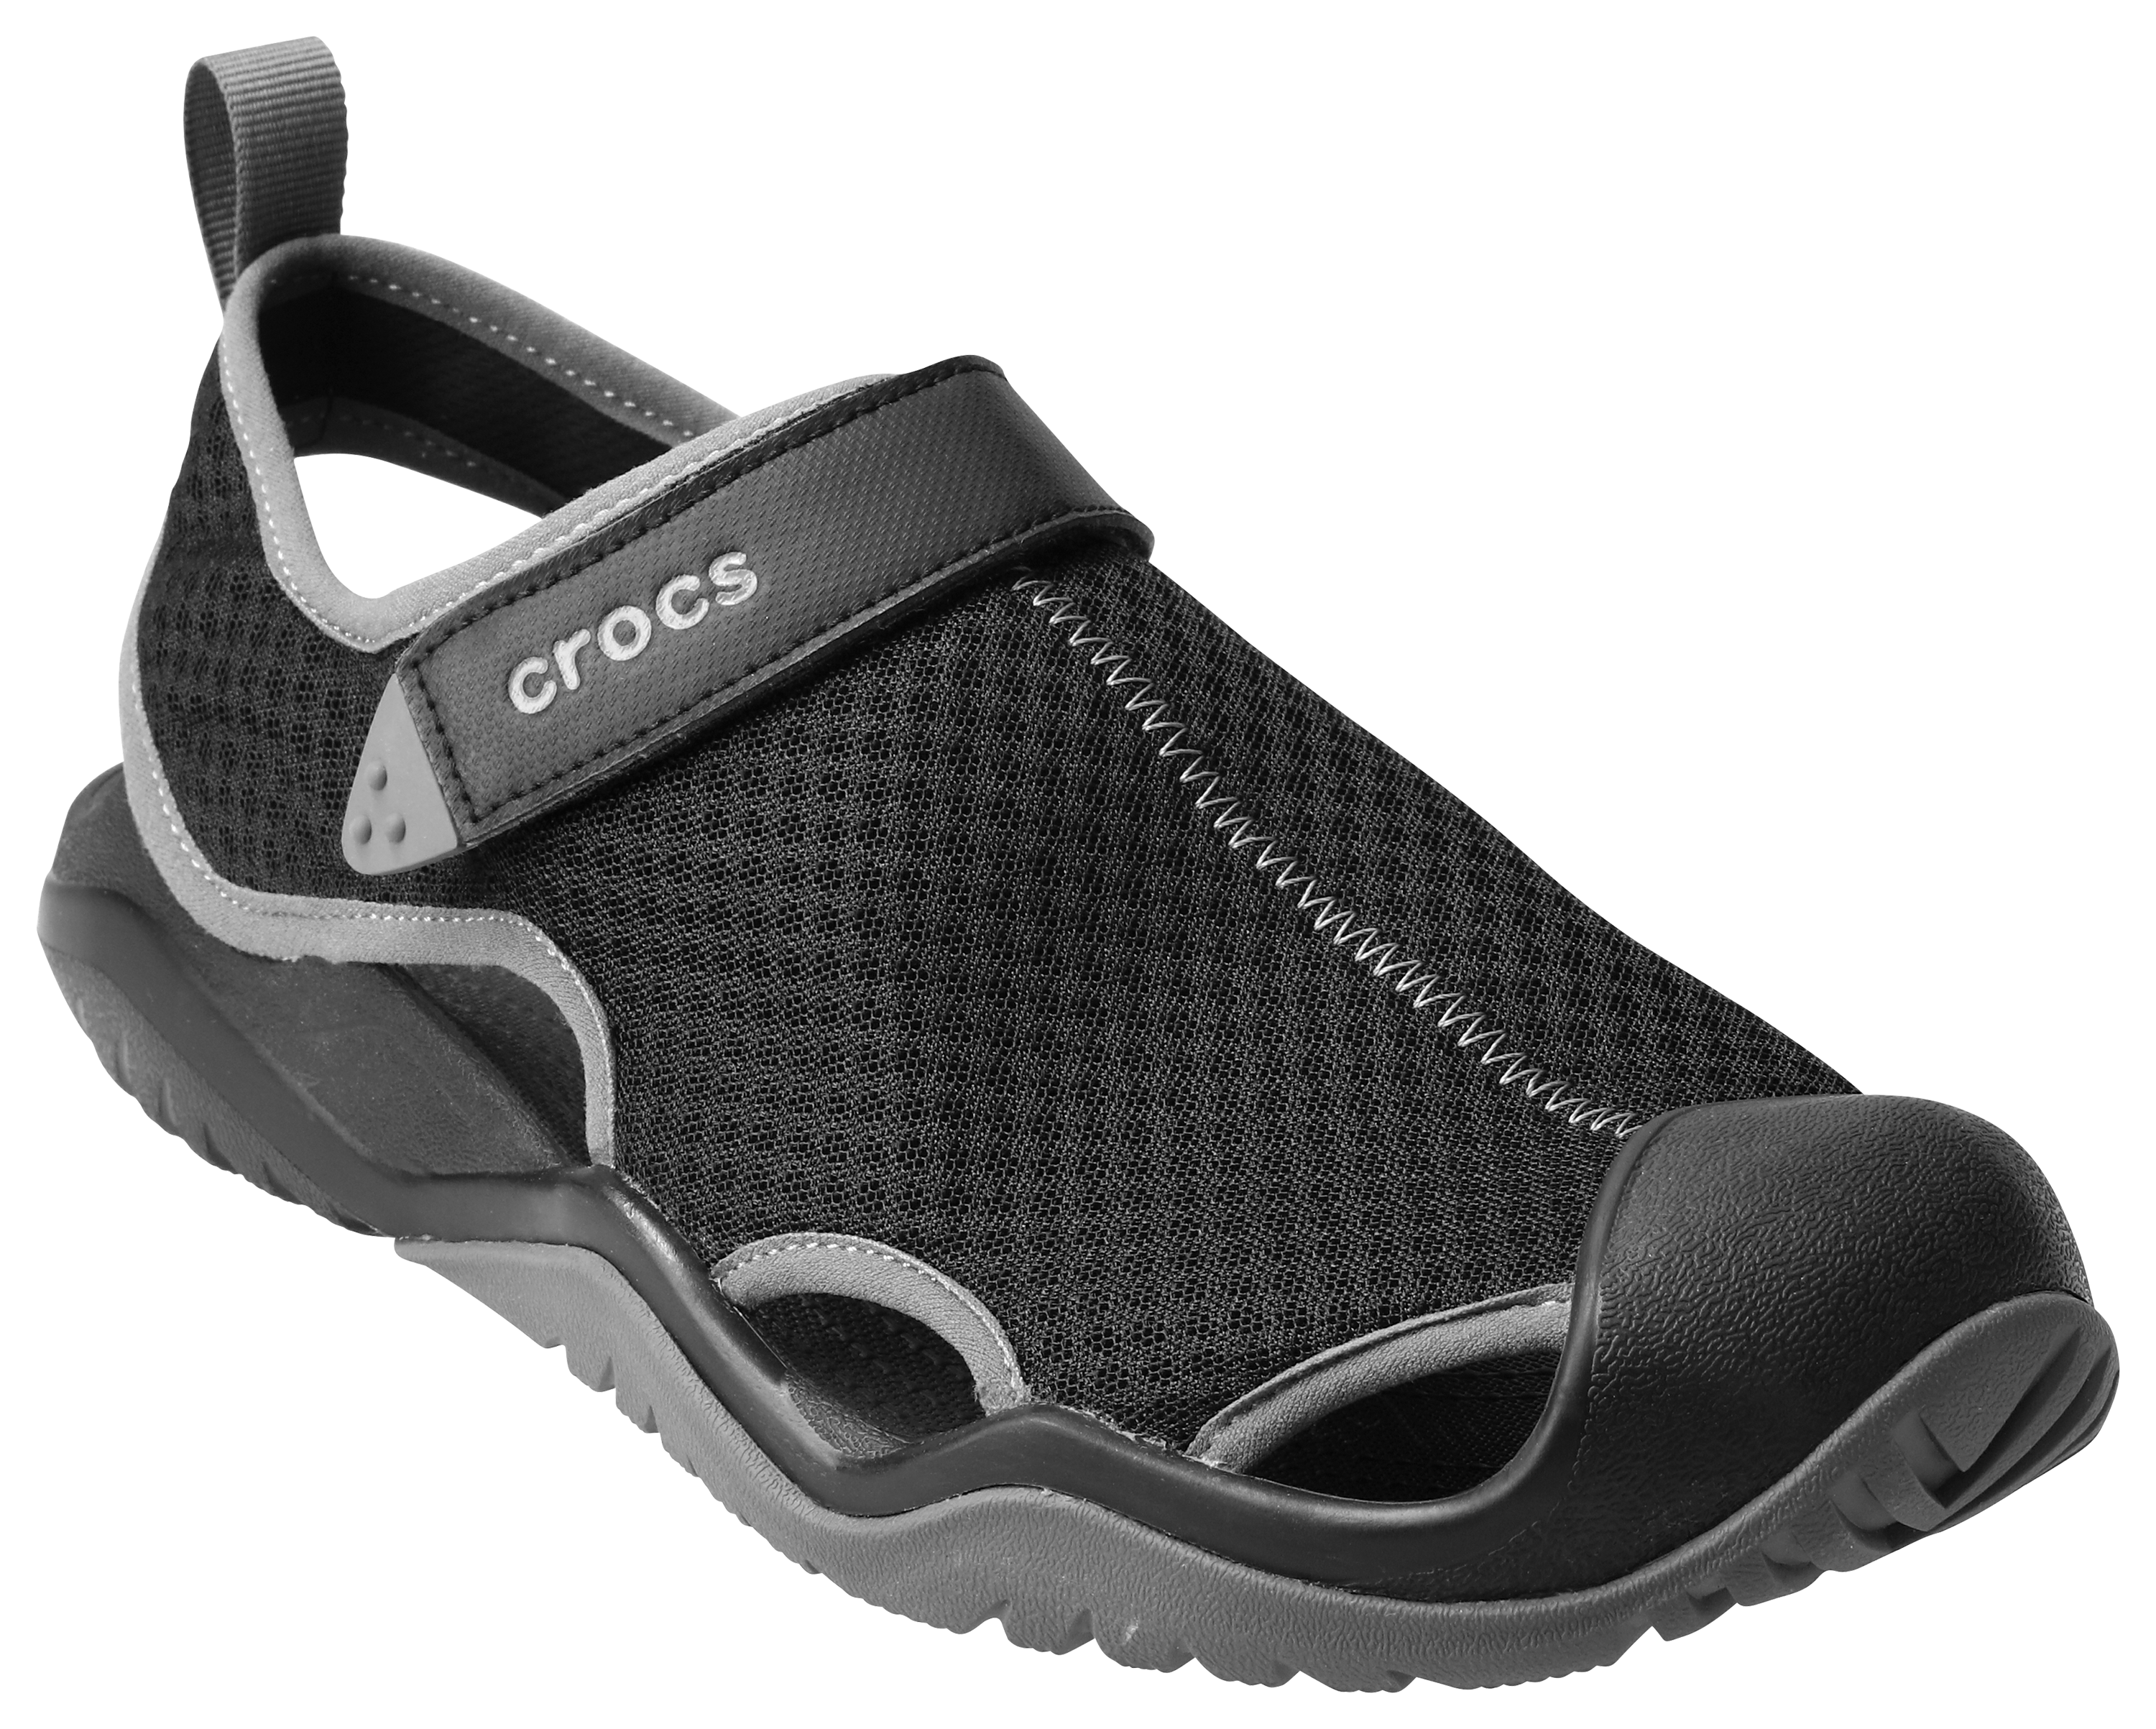 Crocs Swiftwater Mesh Deck Sandals for Men - Black - 8M